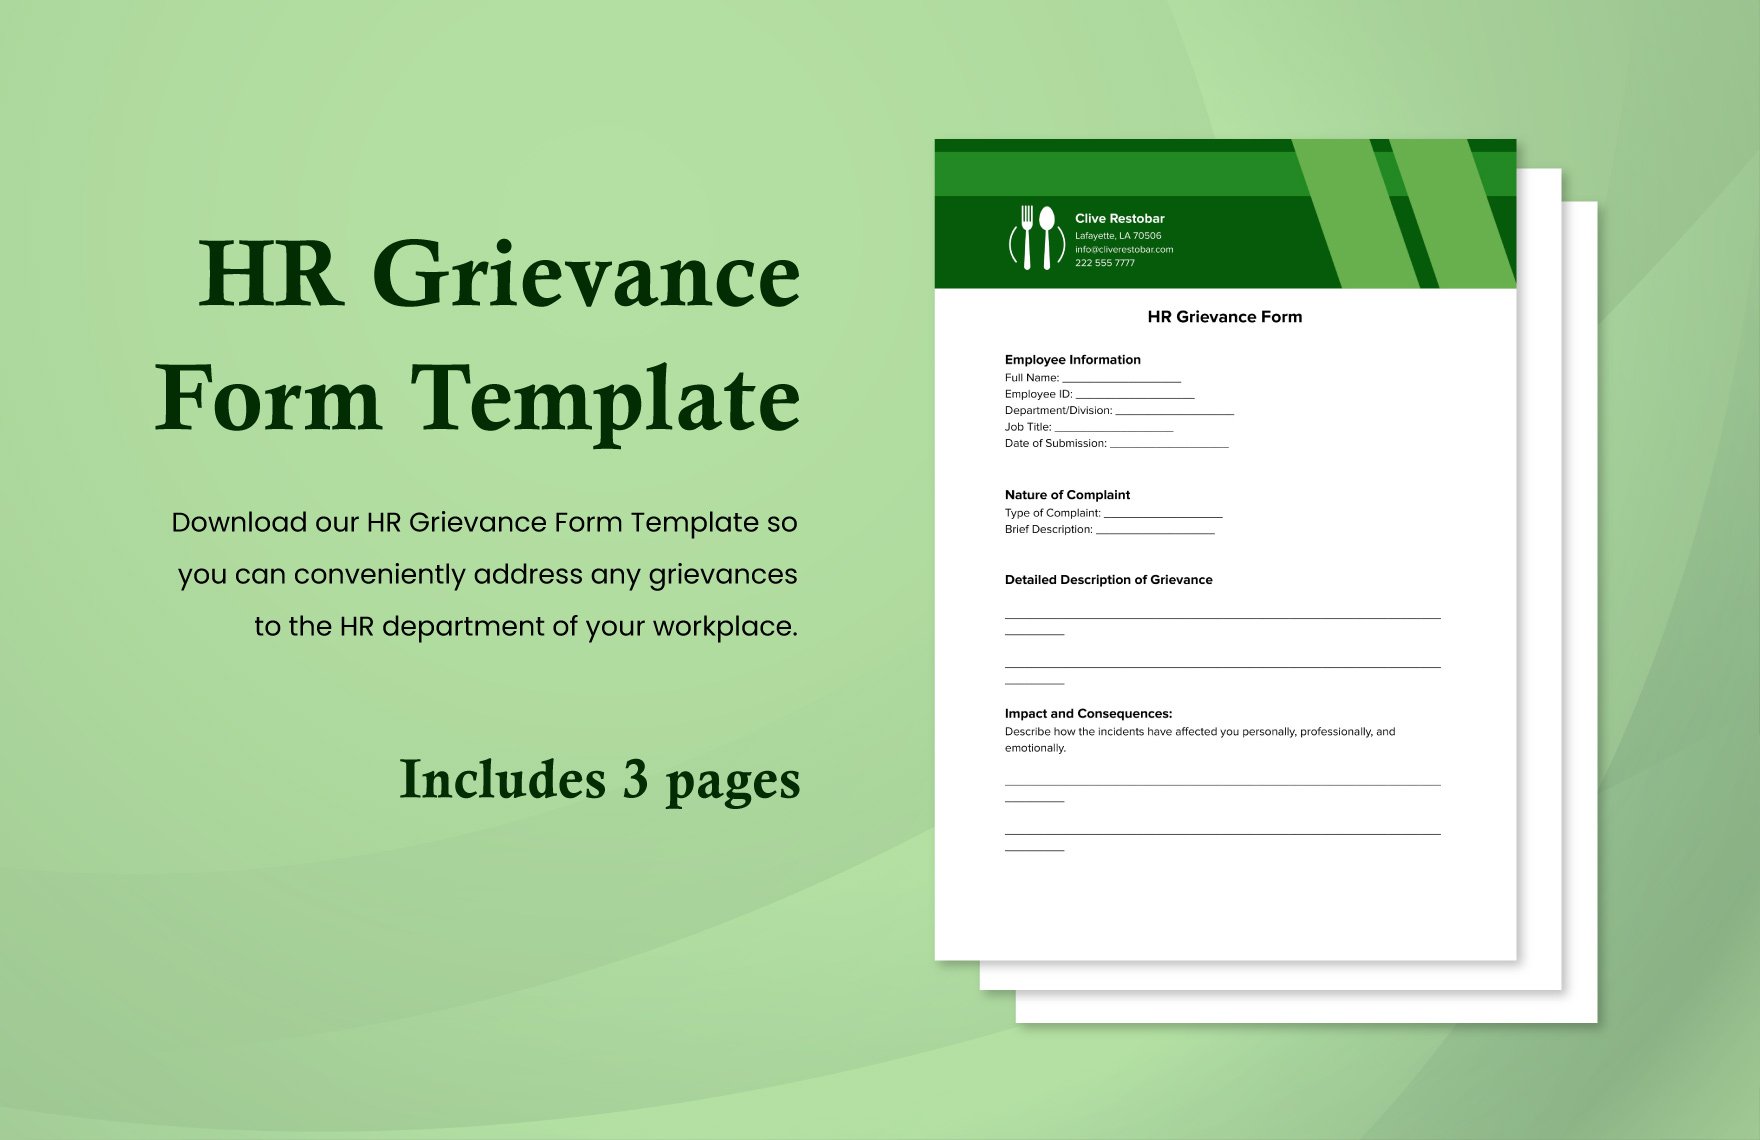 HR Grievance Form Template